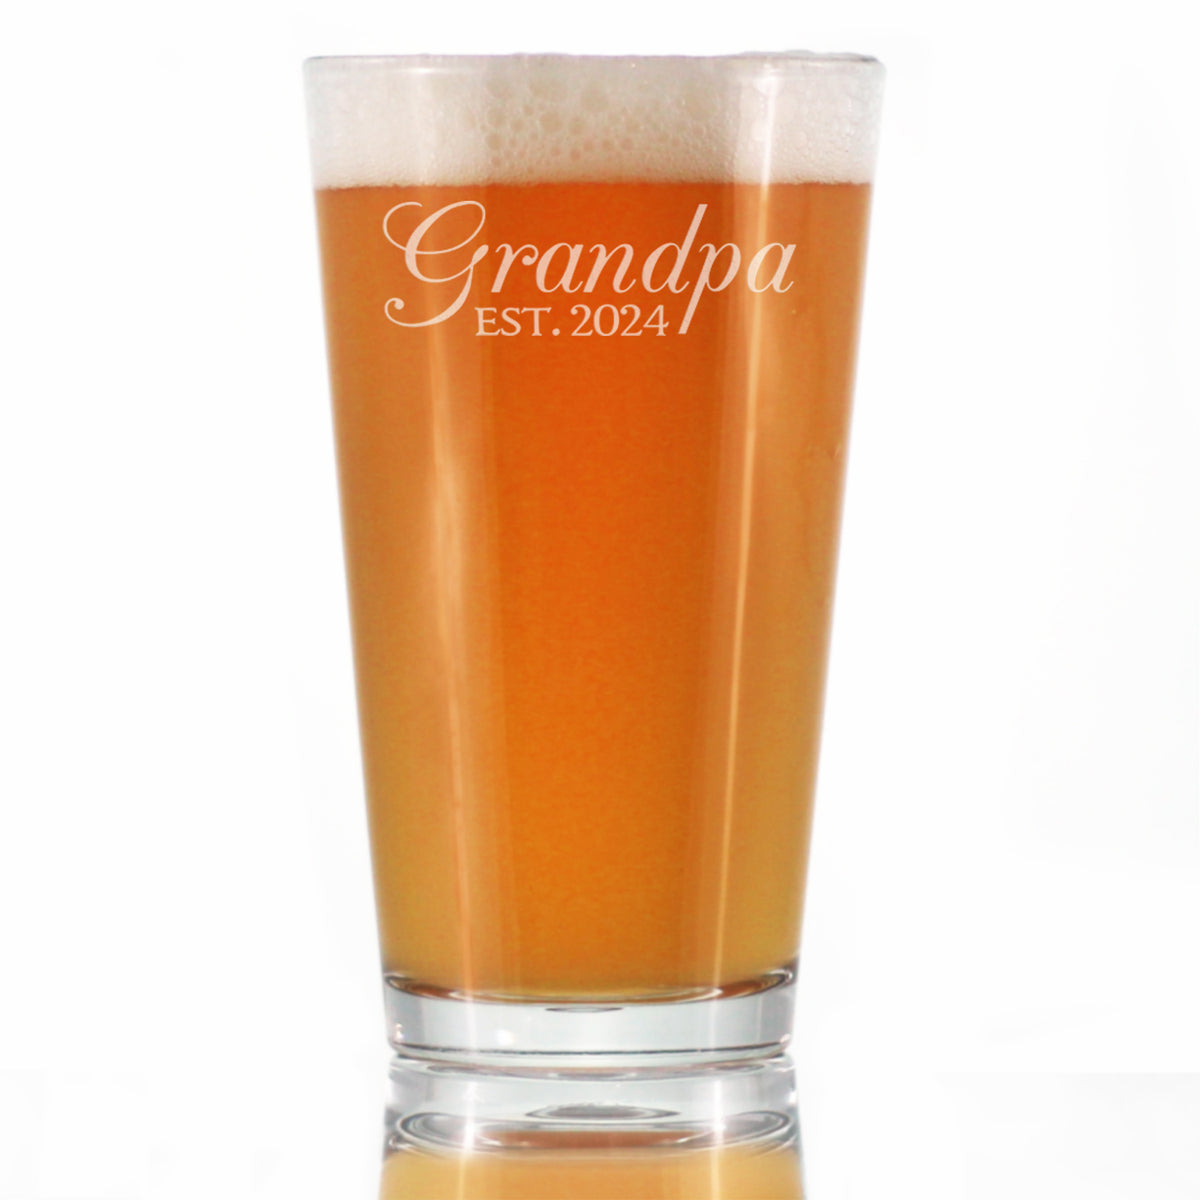 Grandpa Est 2024 - New Grandfather Pint Glass Gift for First Time Grandparents - Decorative 16 Oz Glasses